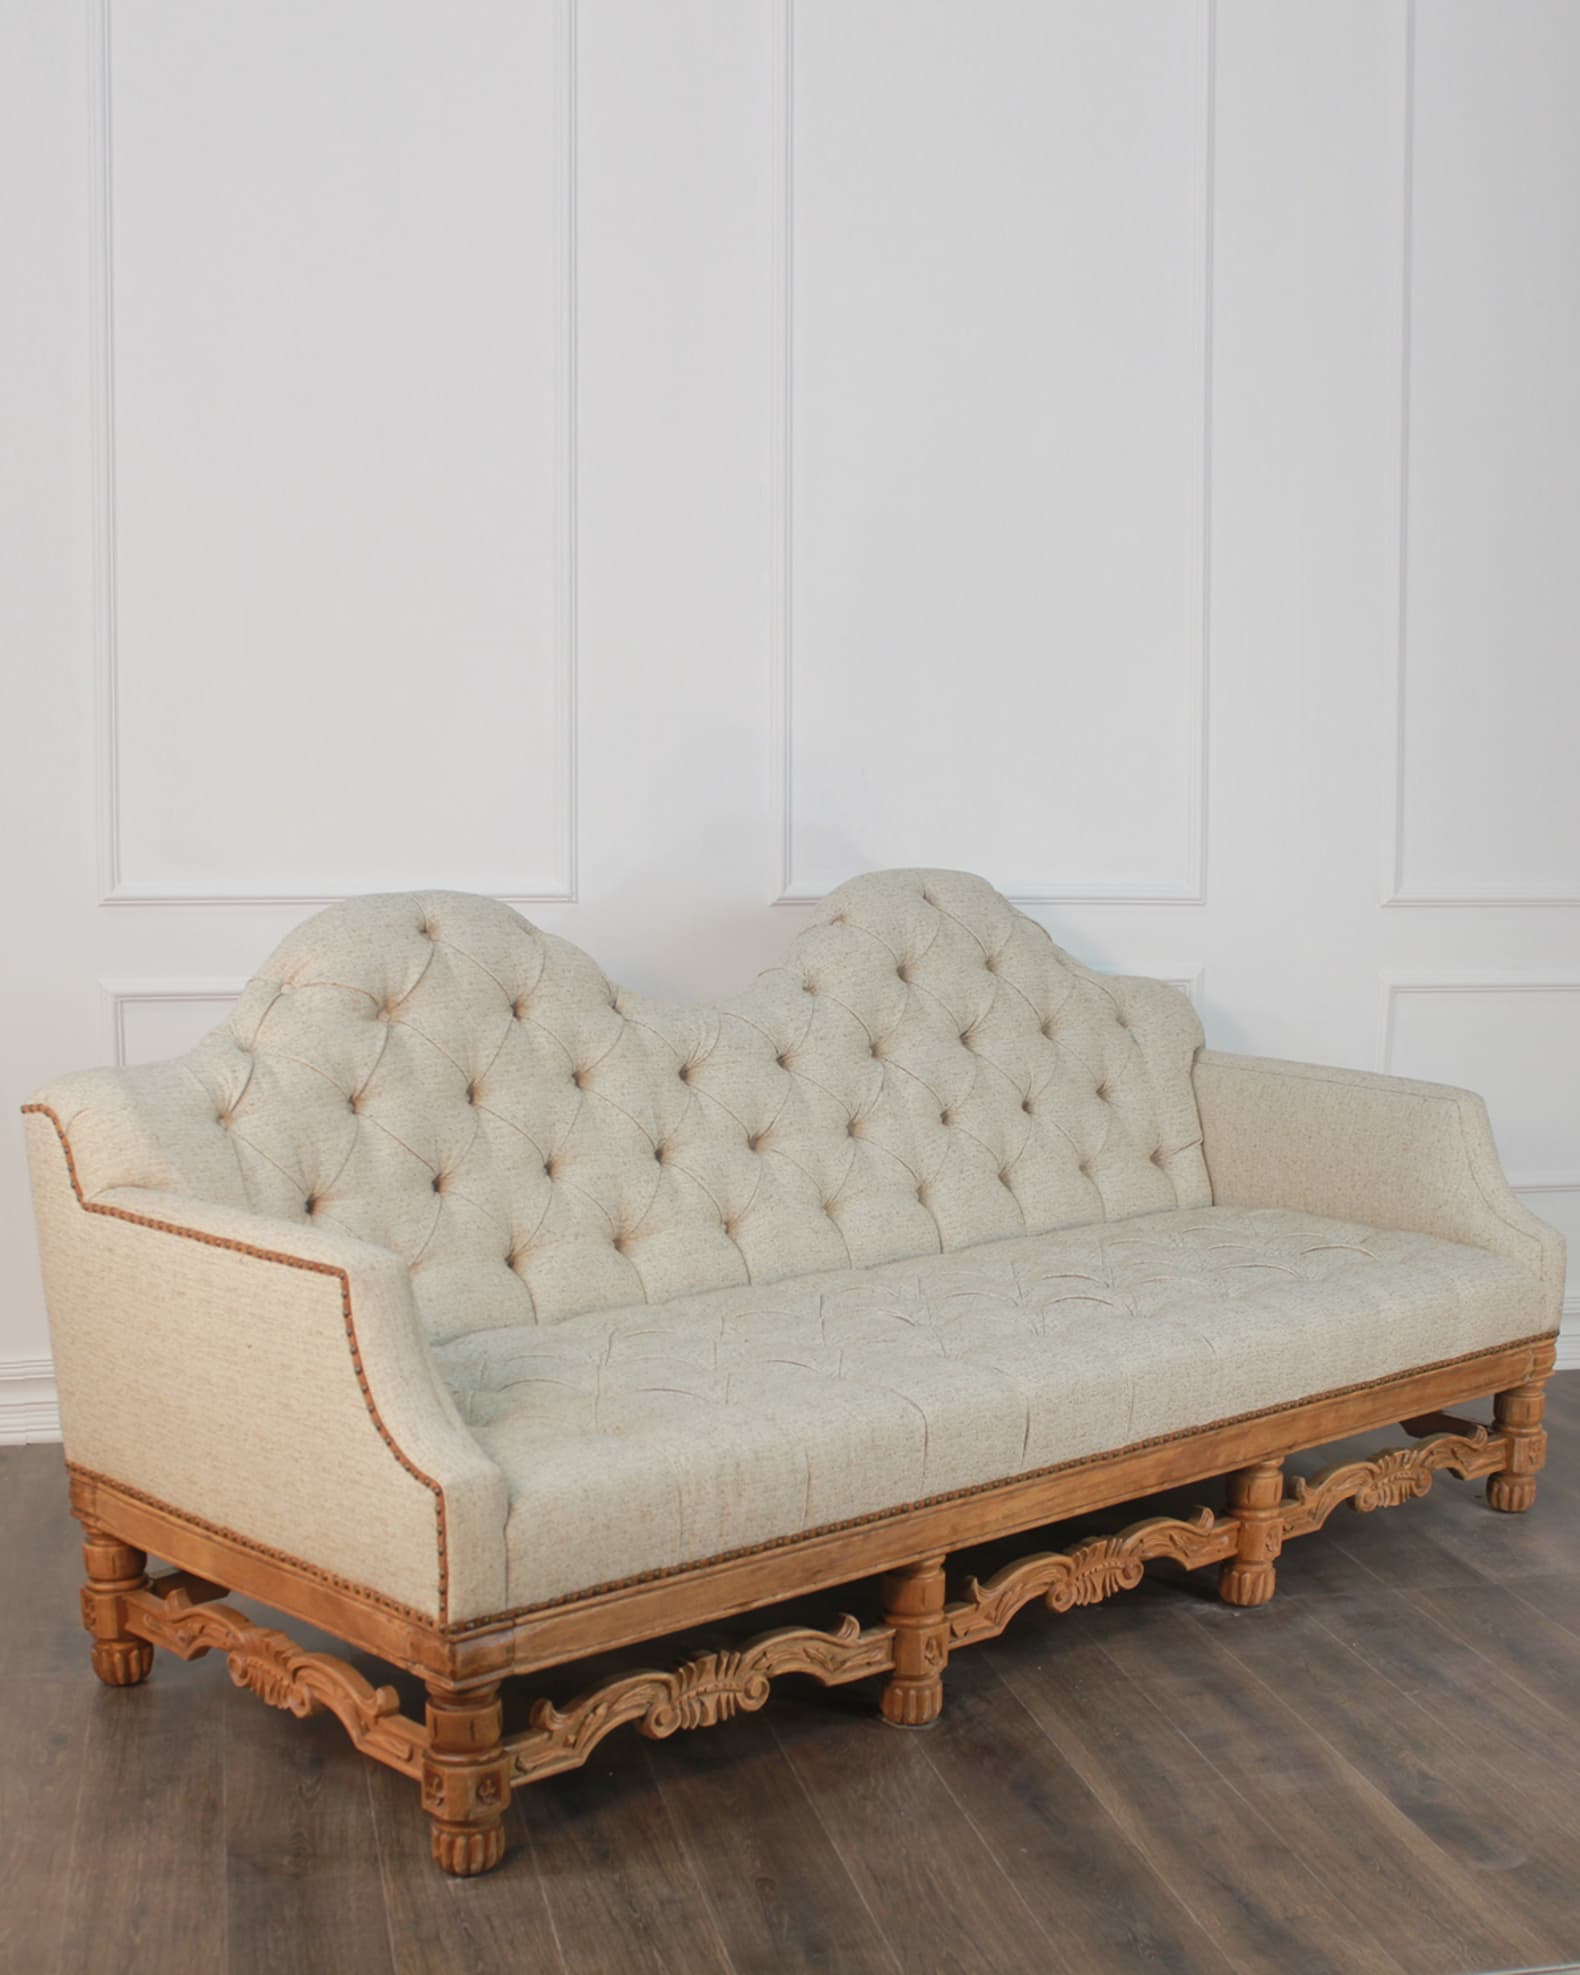 Gather Wood Base Sofa Collection